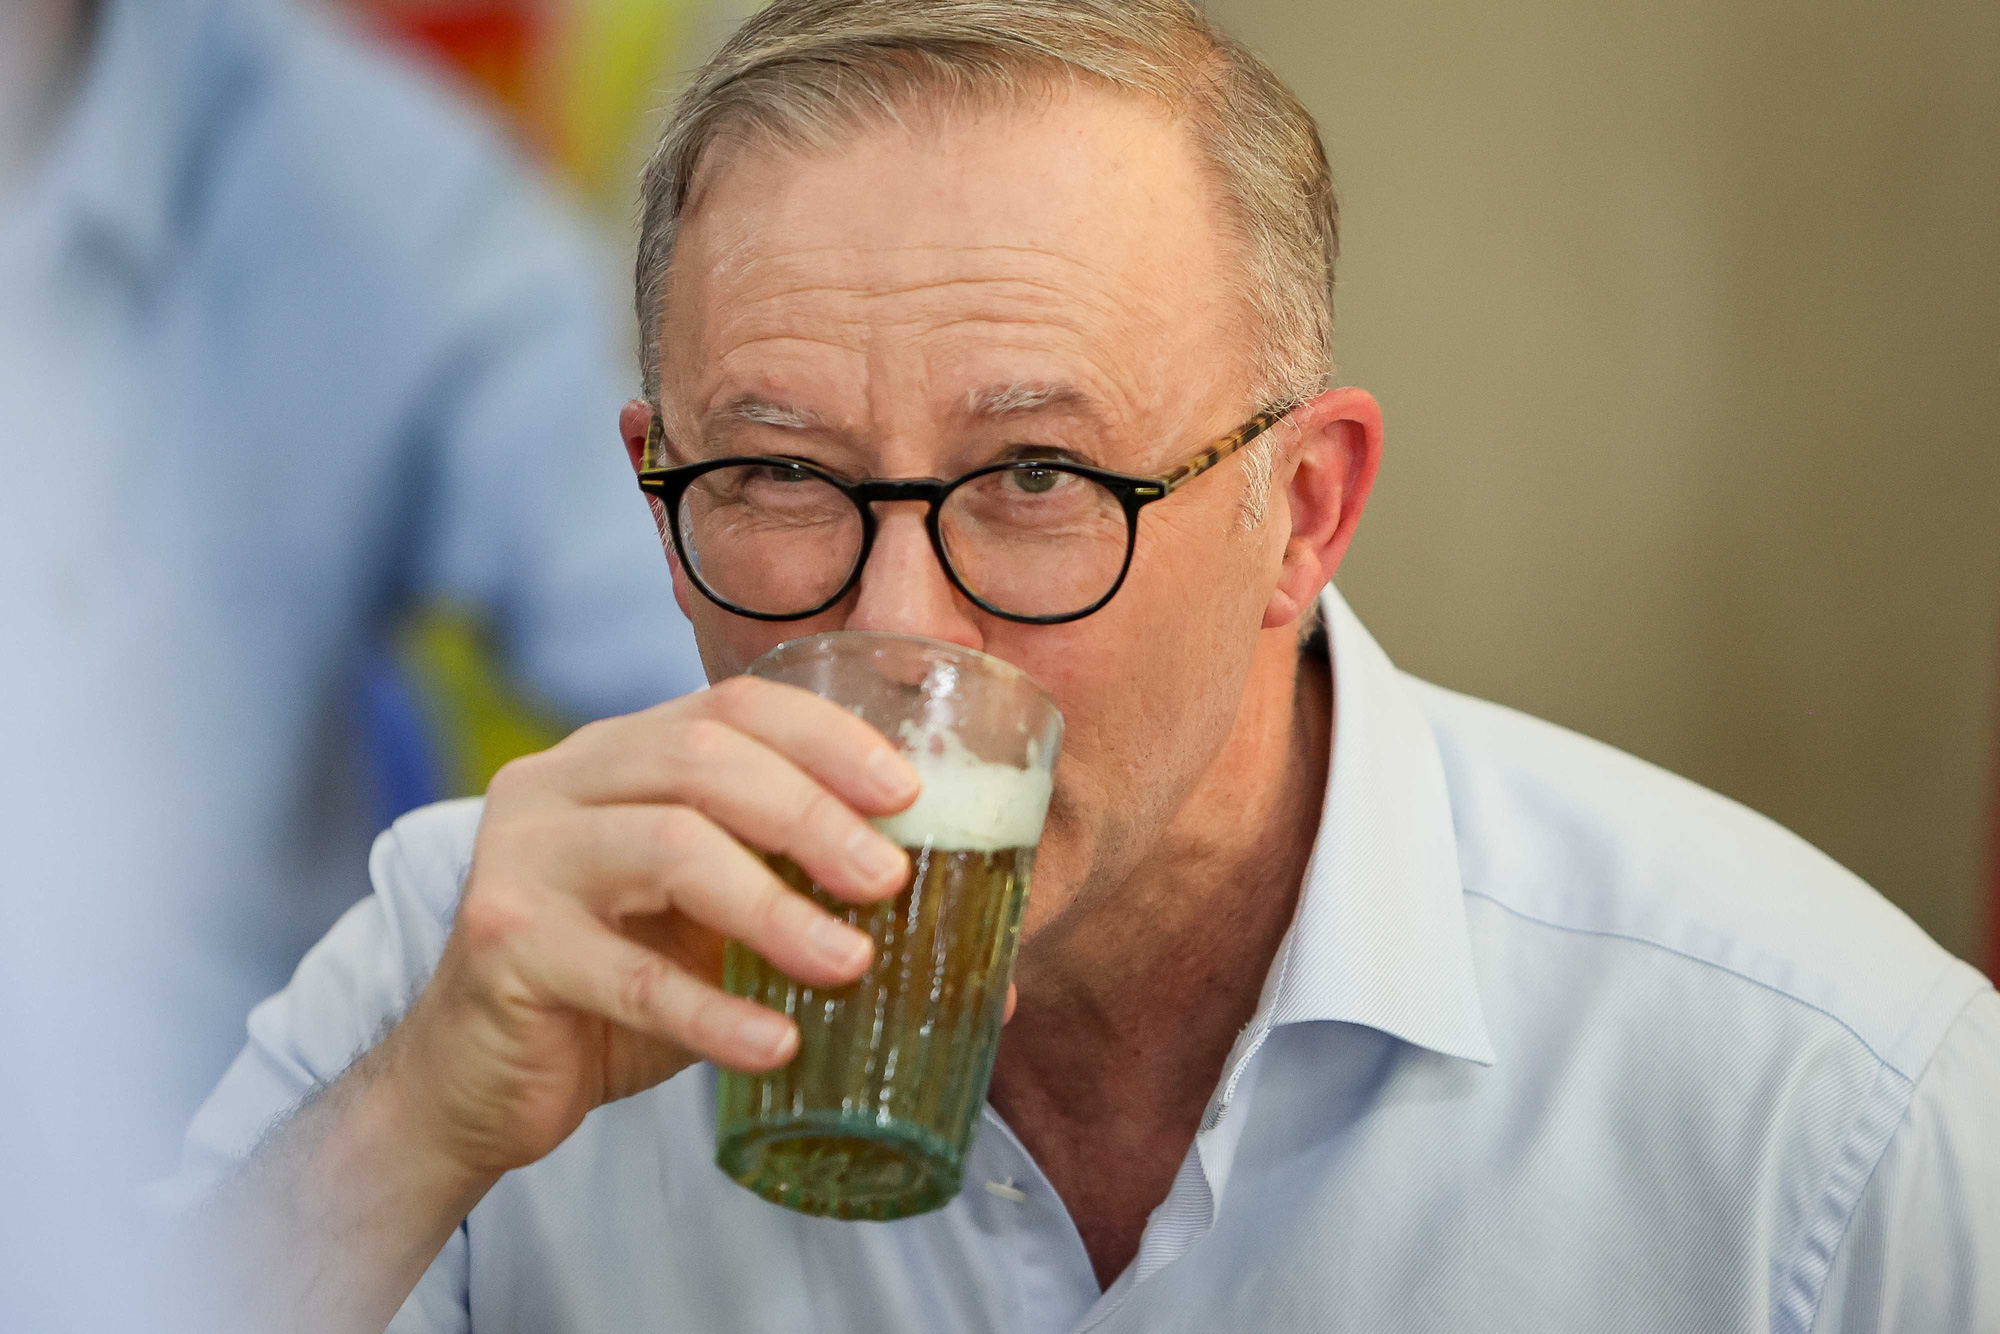 Australian PM tries Hanoi draft beer during visit to Vietnam